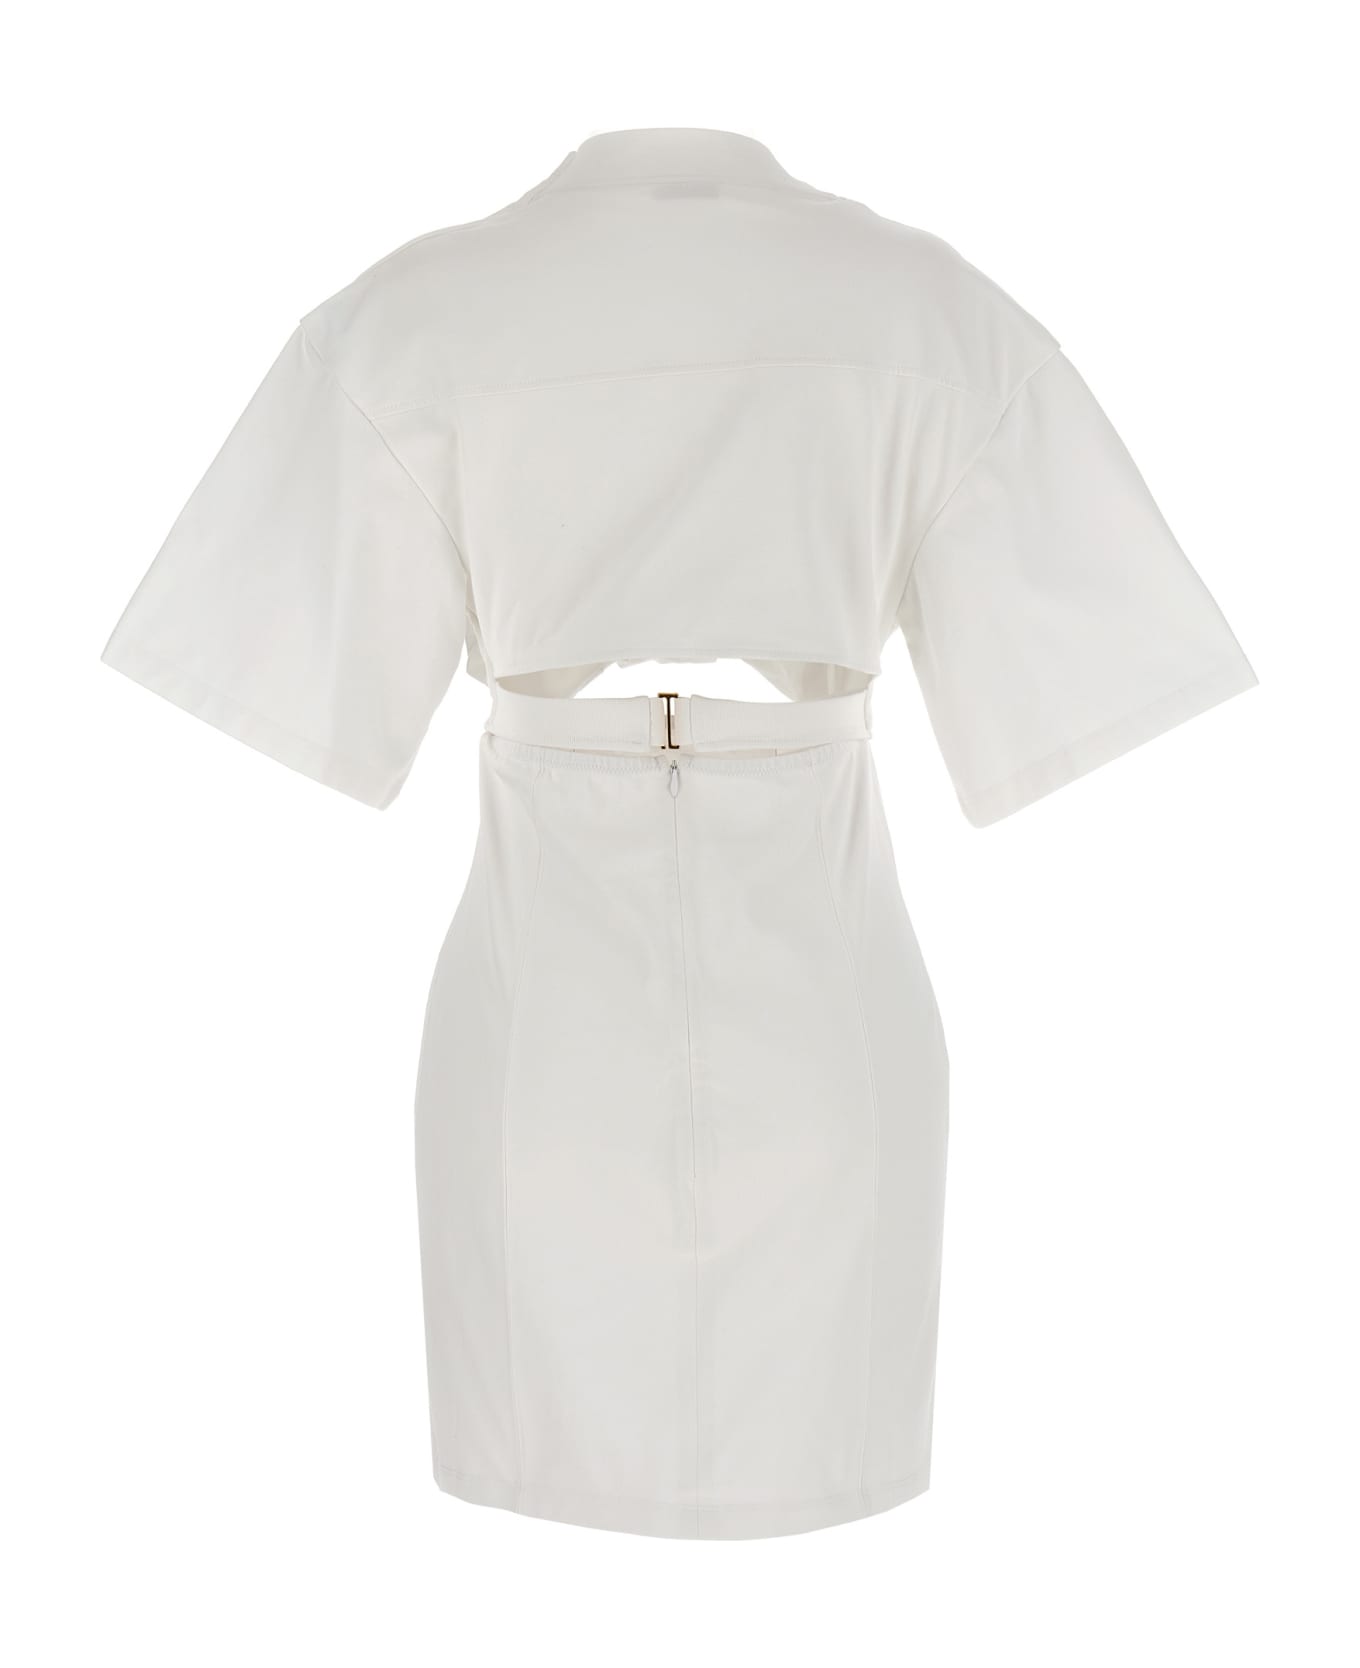 Jacquemus 'bahia' Dress - White